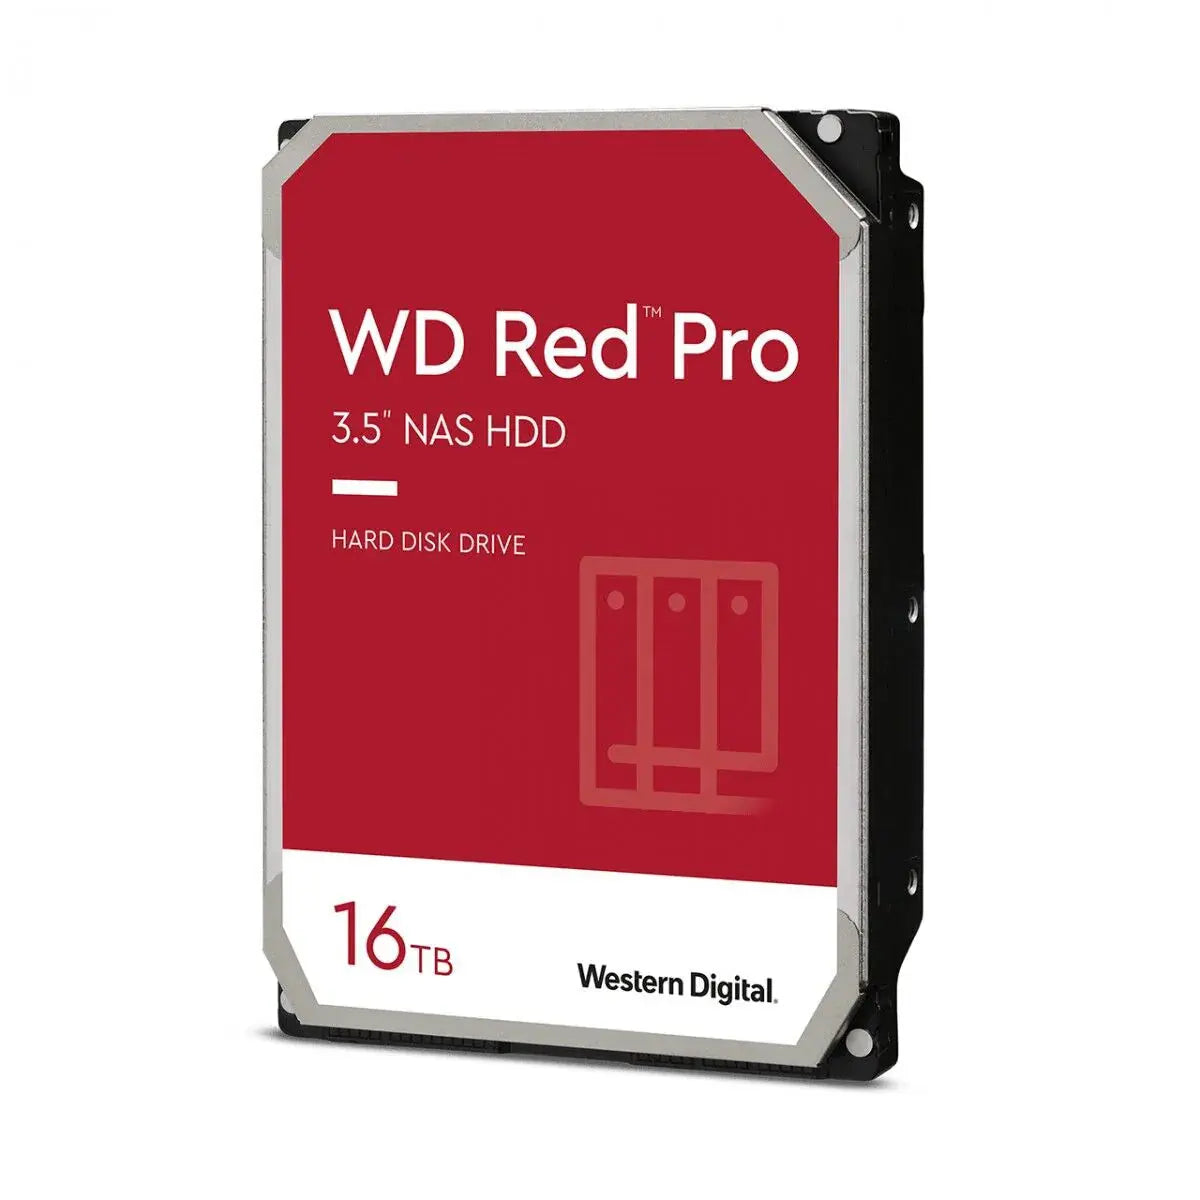 WD Red Pro WD161KFGX 512MB 16TB Western Digital